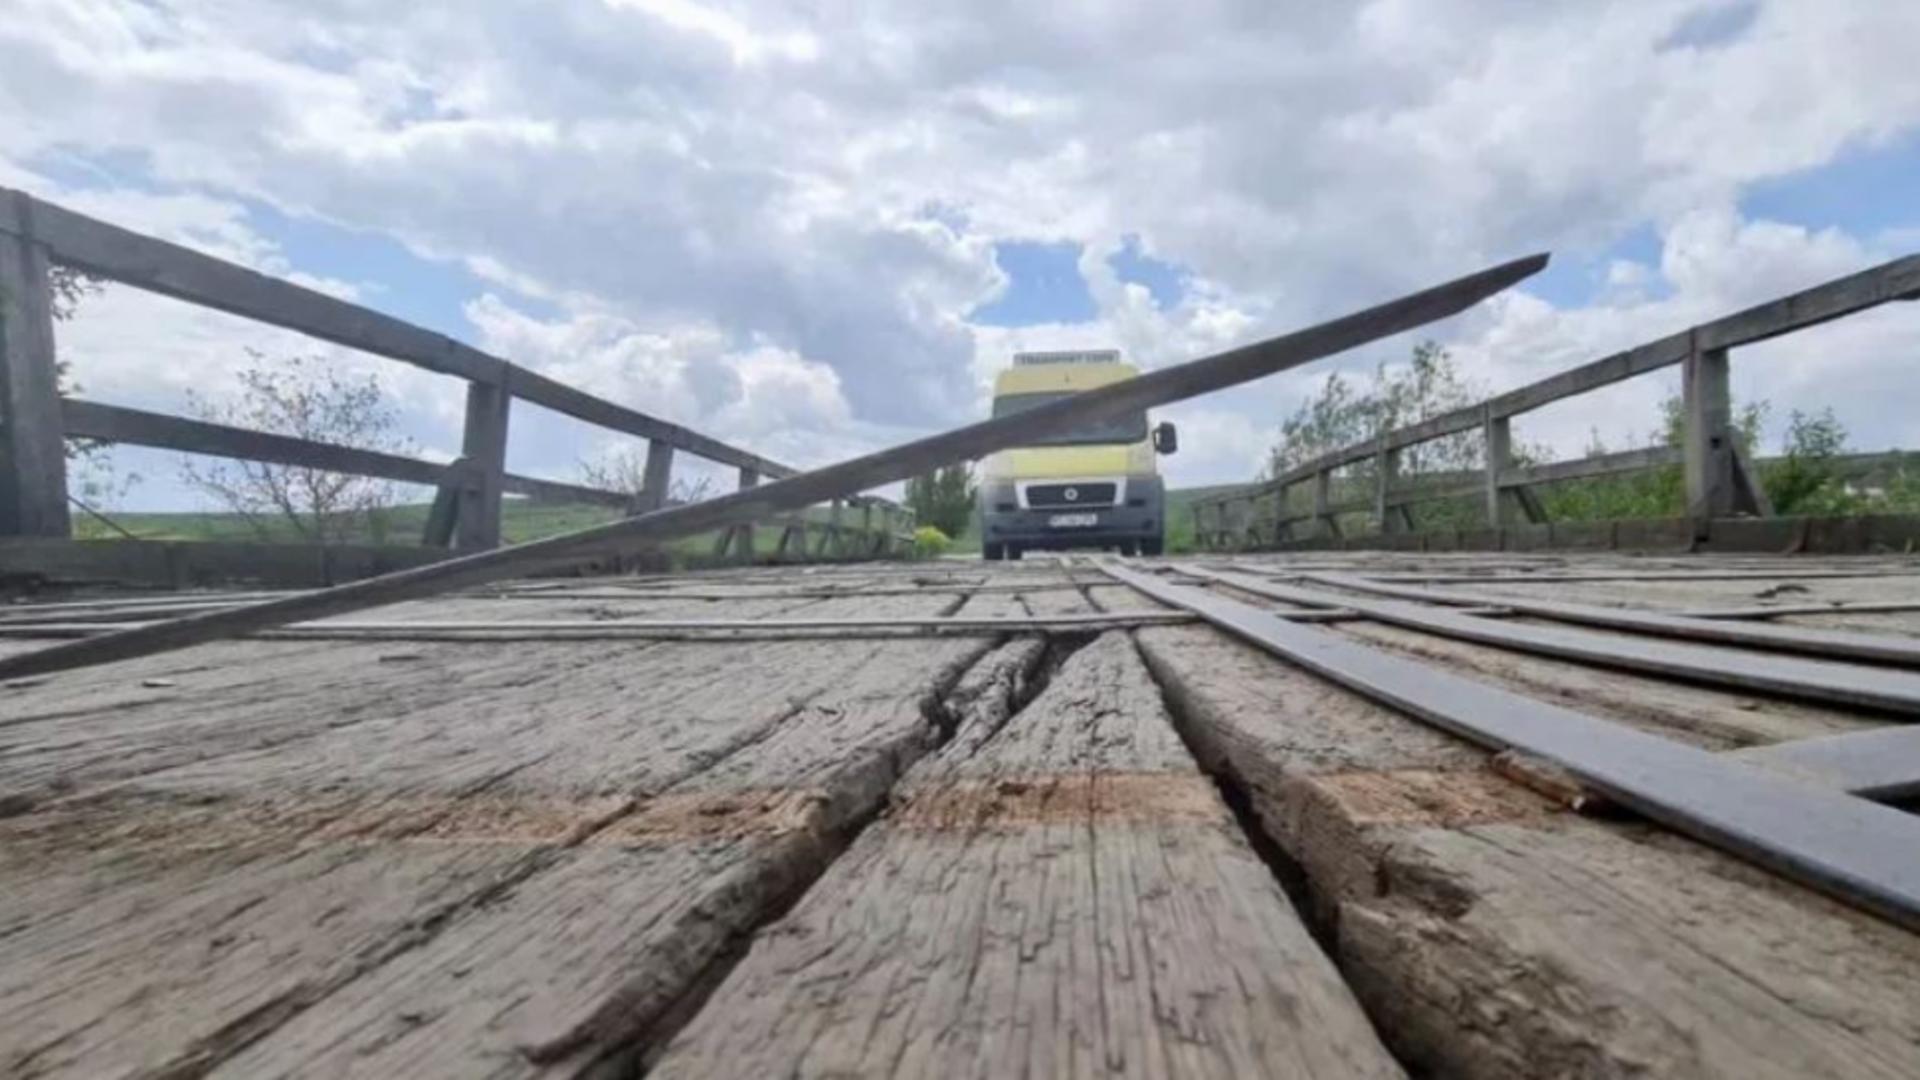 Pod făcut praf, pericol pentru copii. Foto/monitorulbt.ro